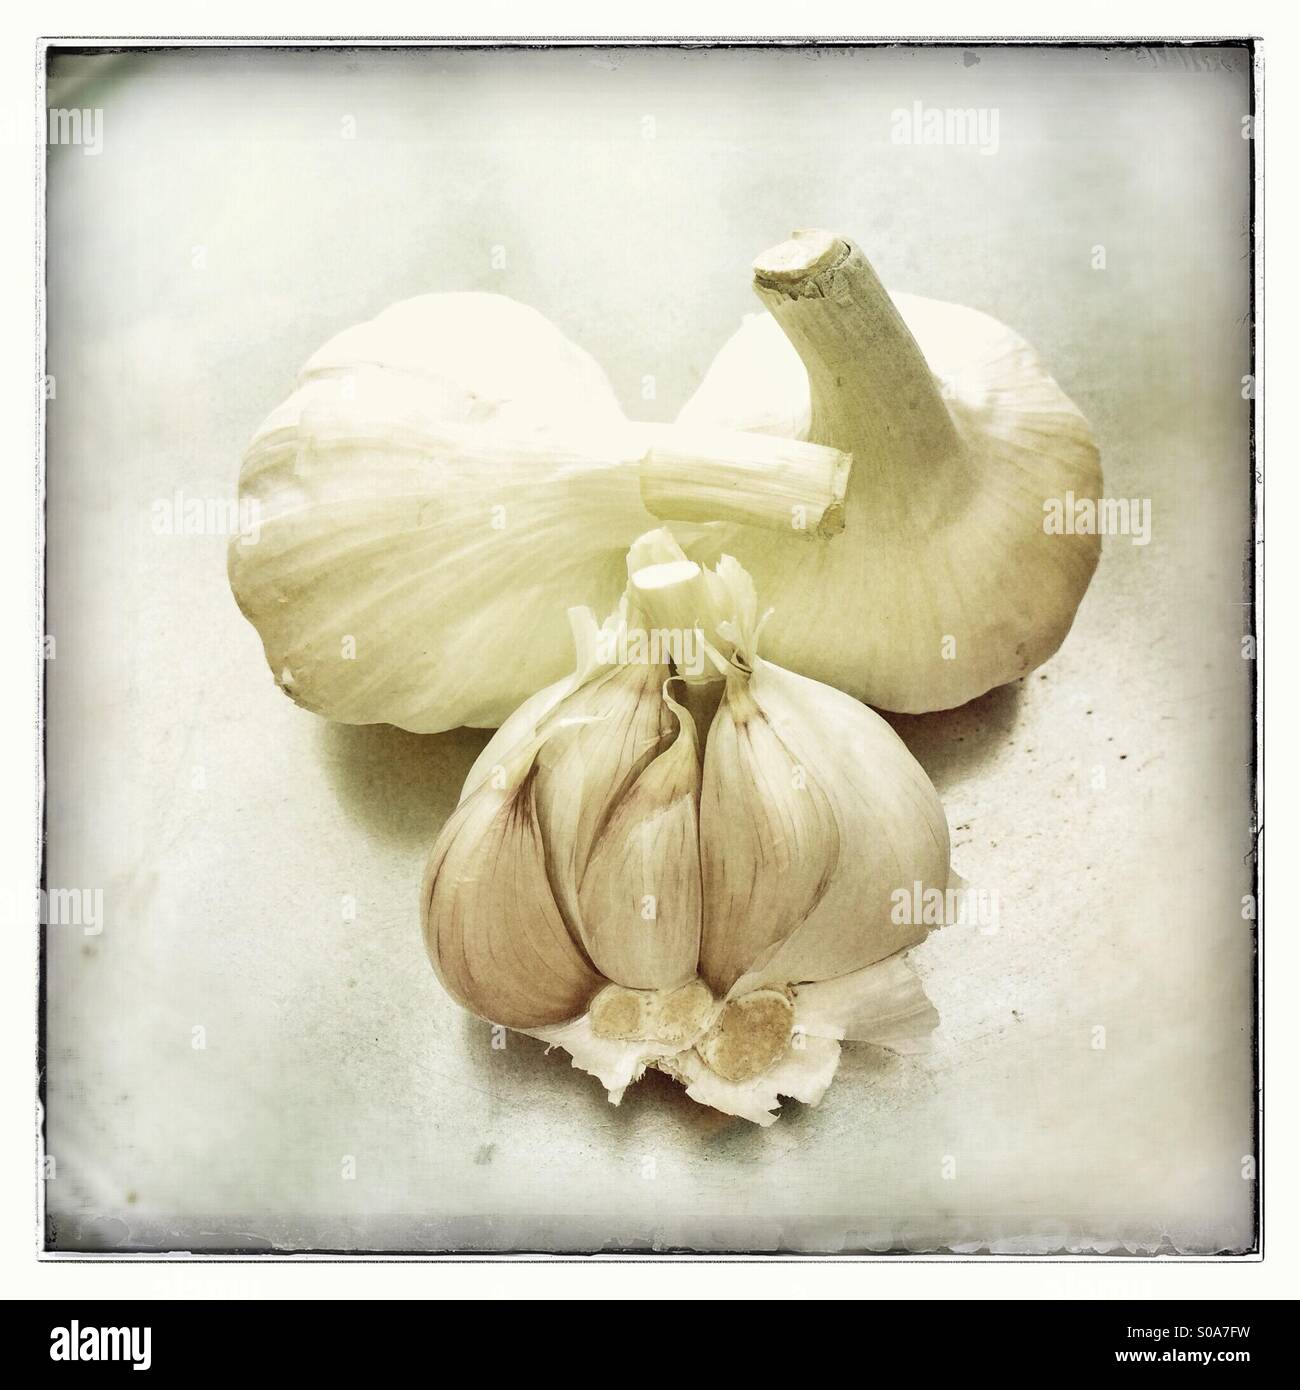 Garlic bulbs and cloves Stock Photo